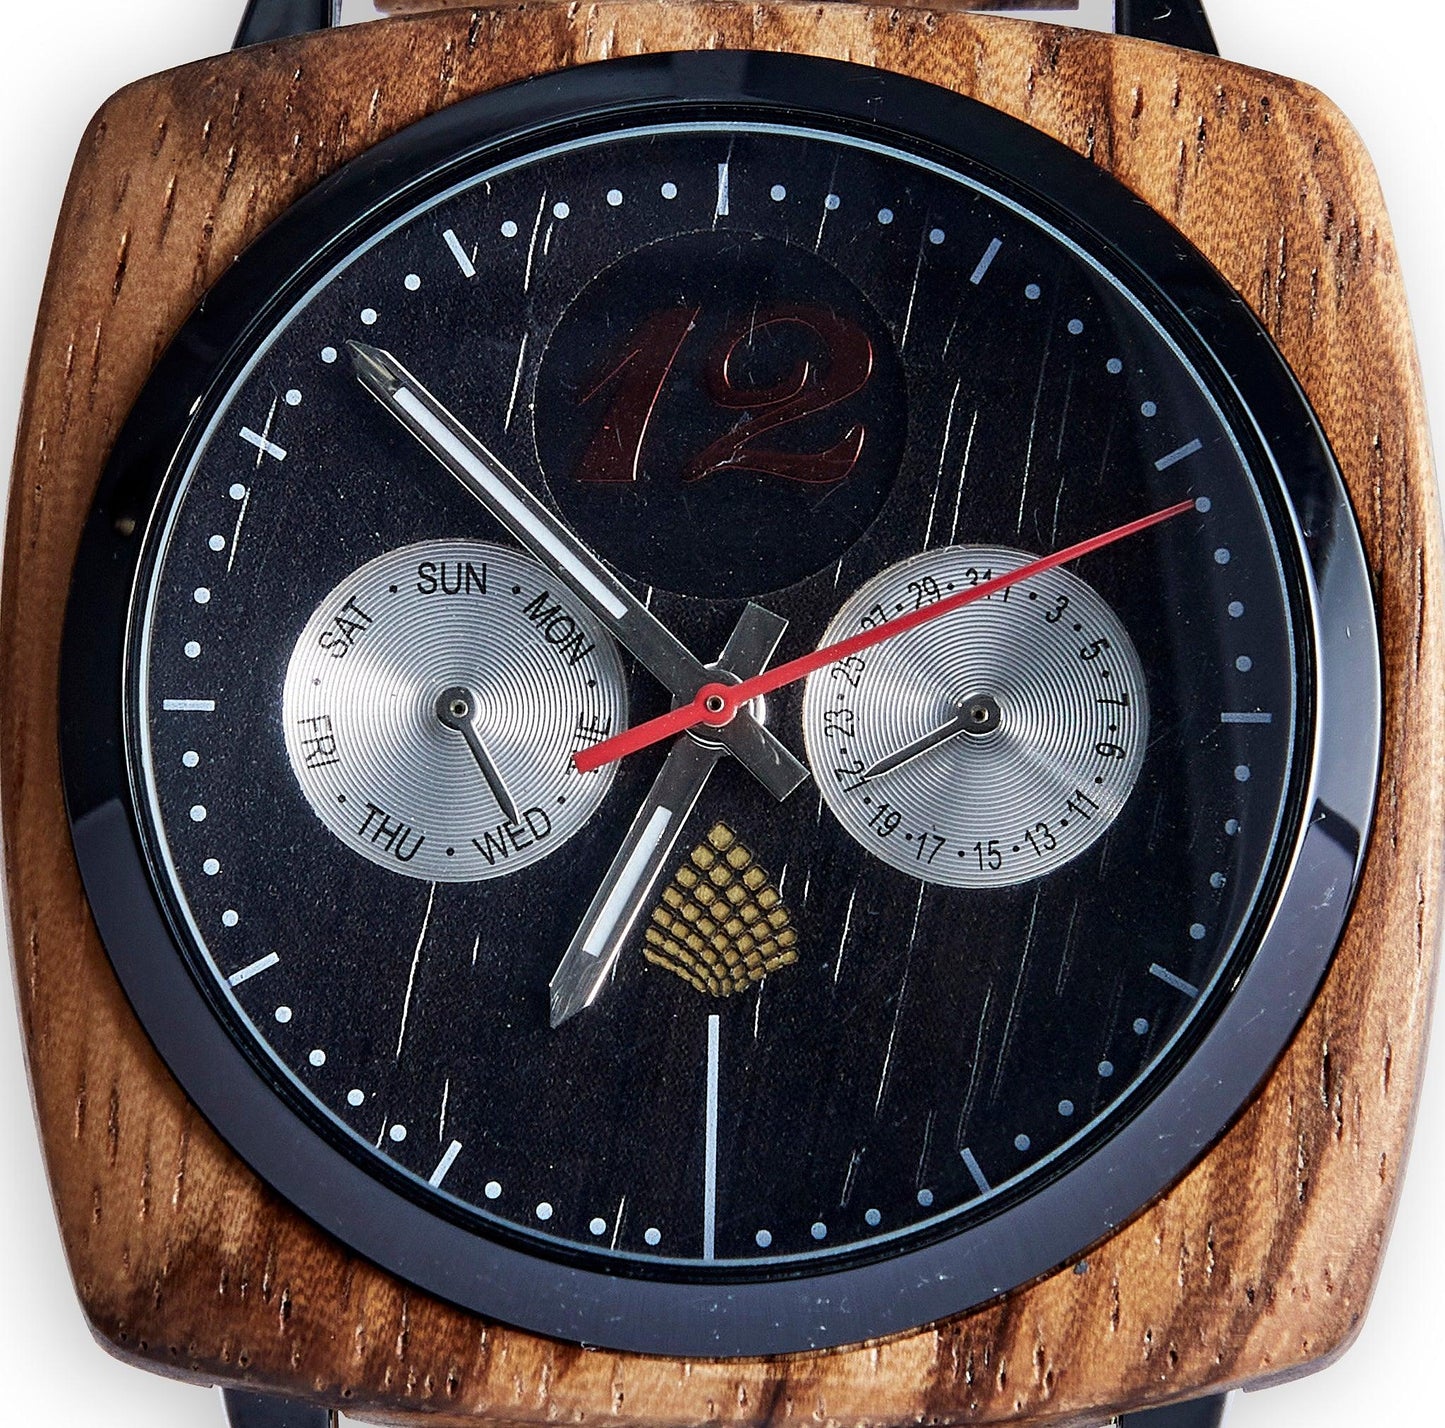 Colección de relojes de madera - The Oak